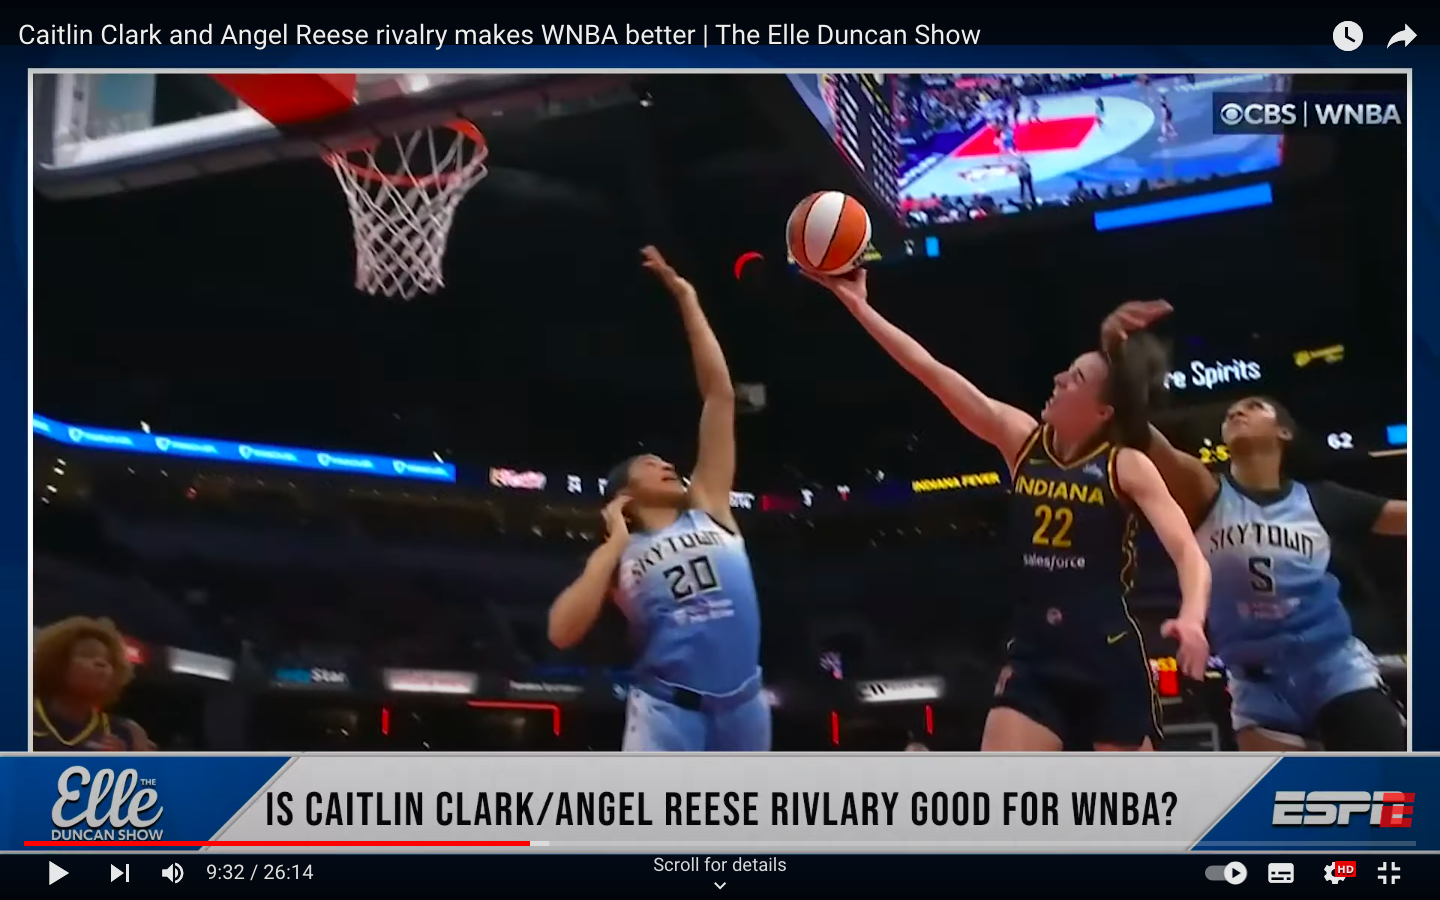 HAW: Image of WNBA basketball